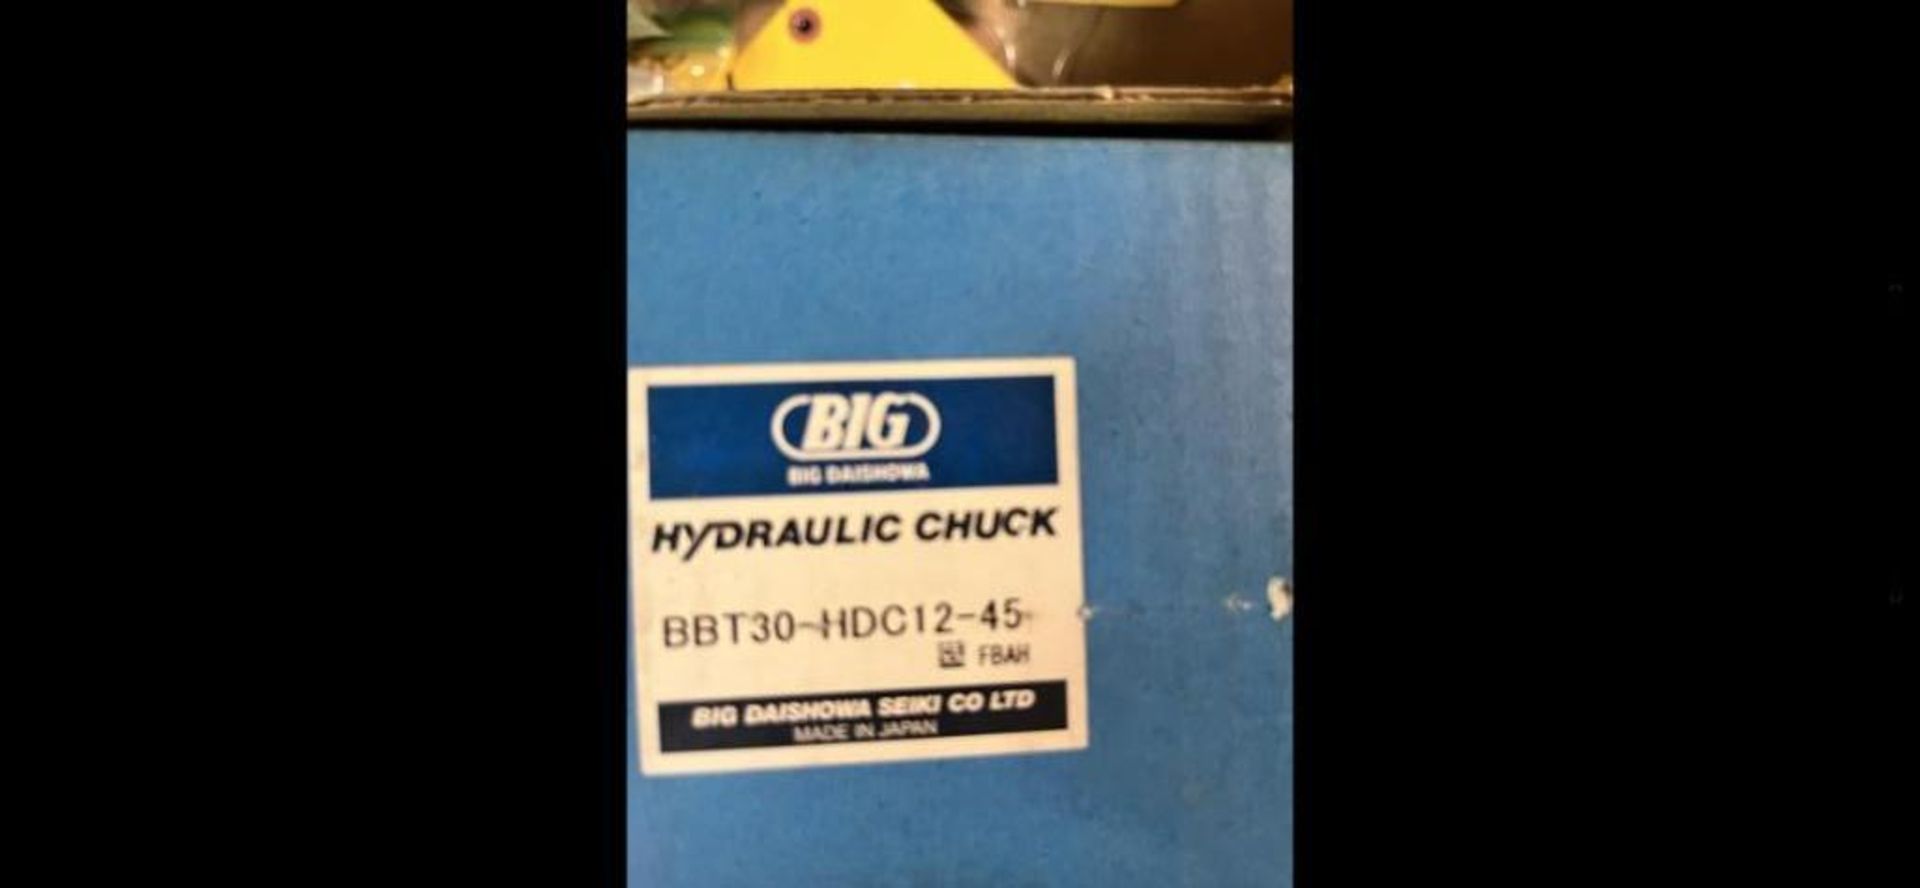 Big Daishowa Hydraulic Chuck, BBT30-HDC12-45 - Image 3 of 4